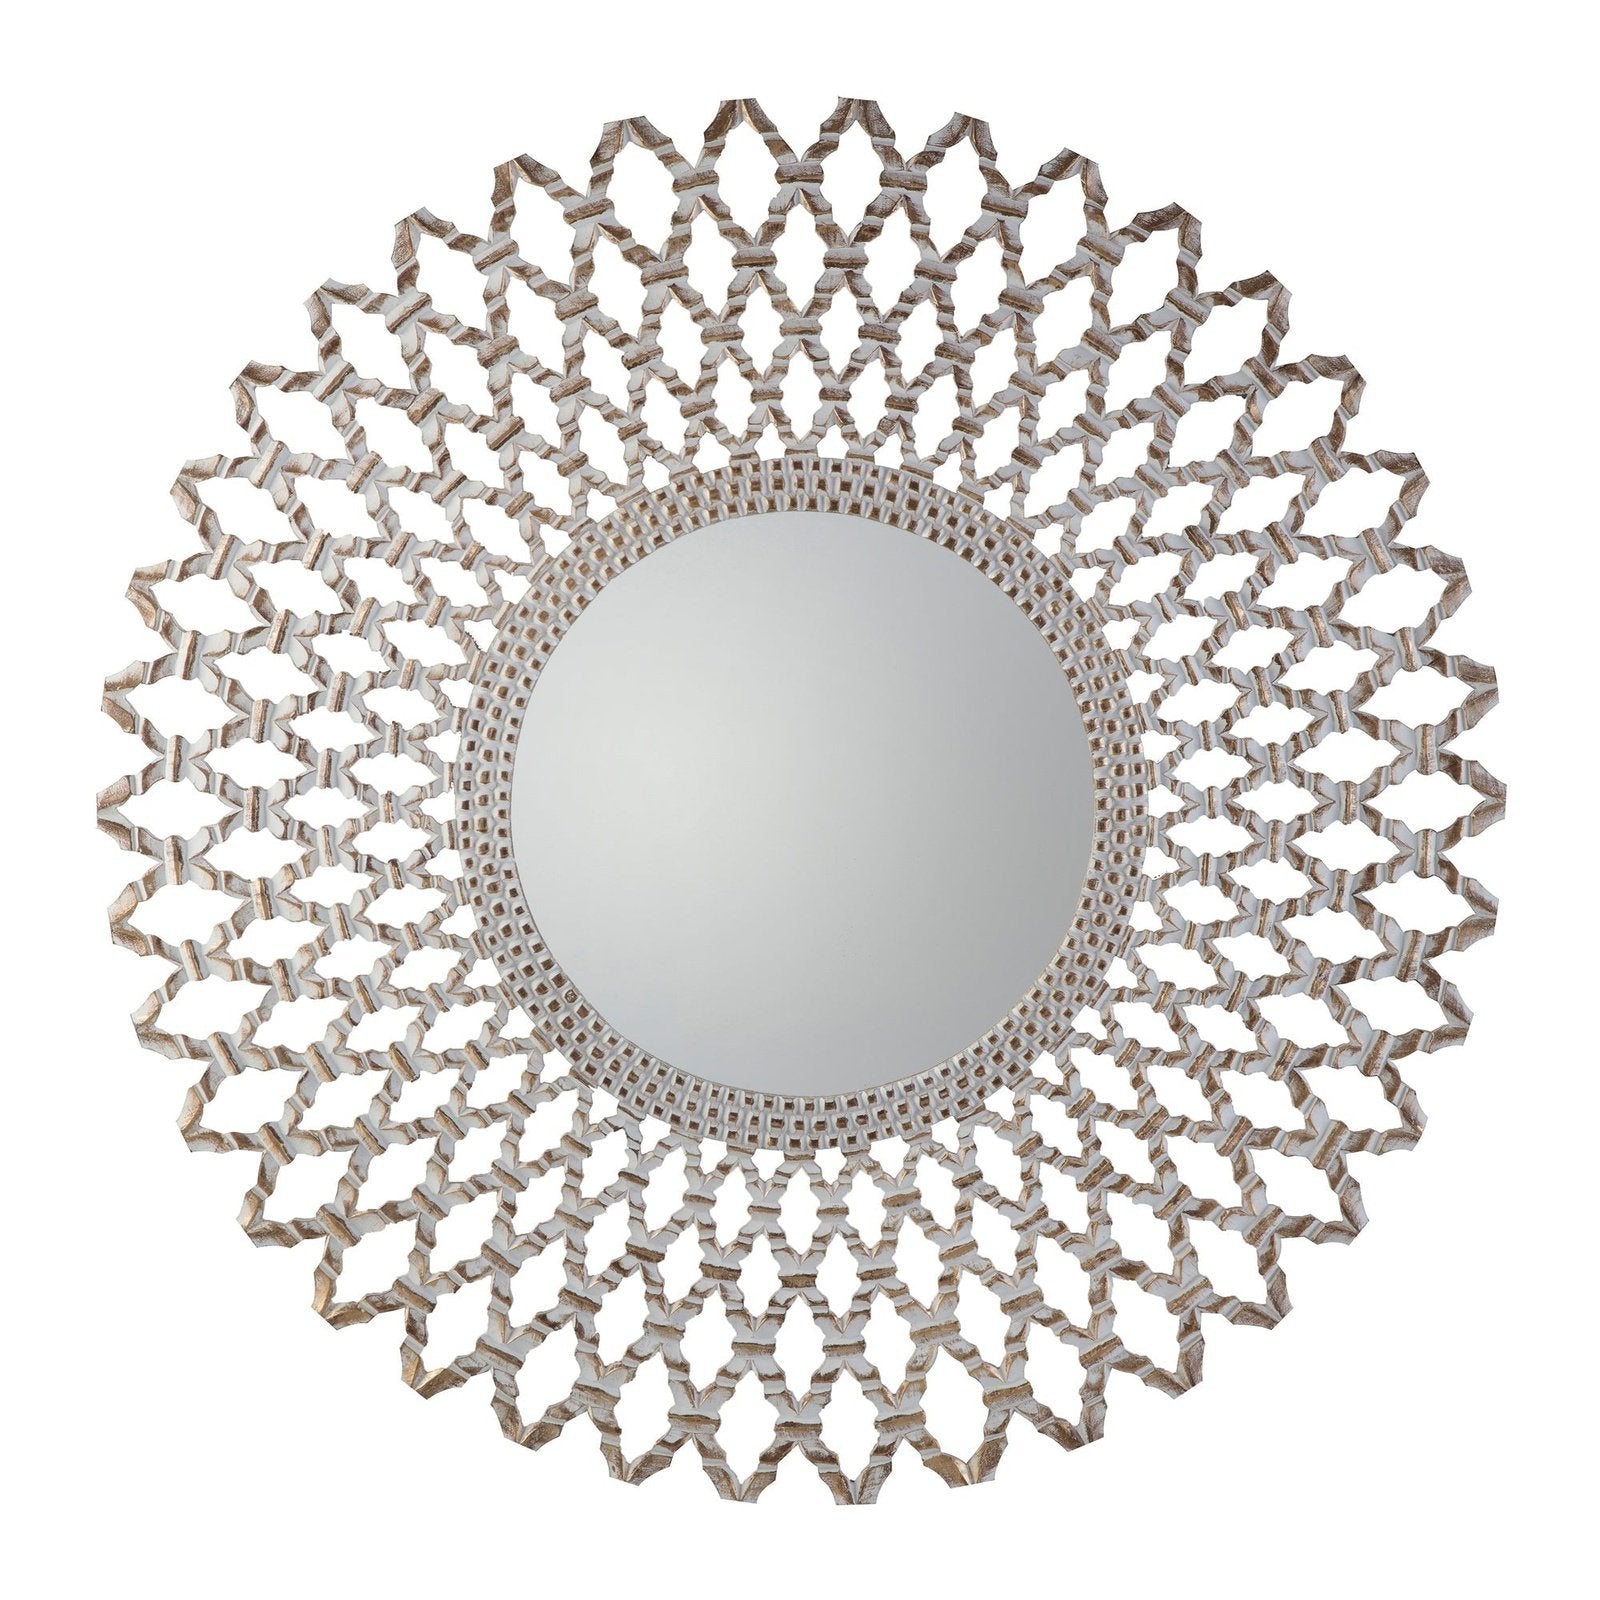 Sunburst Mirror 122 x 122cm - Latticework Circular Frame - Whitewash & Gold Accents